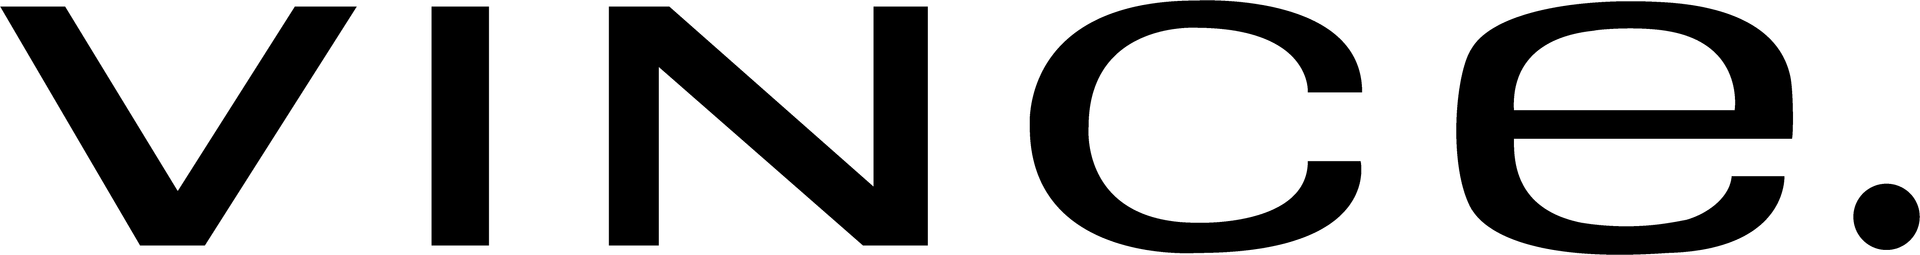 VINCE logo